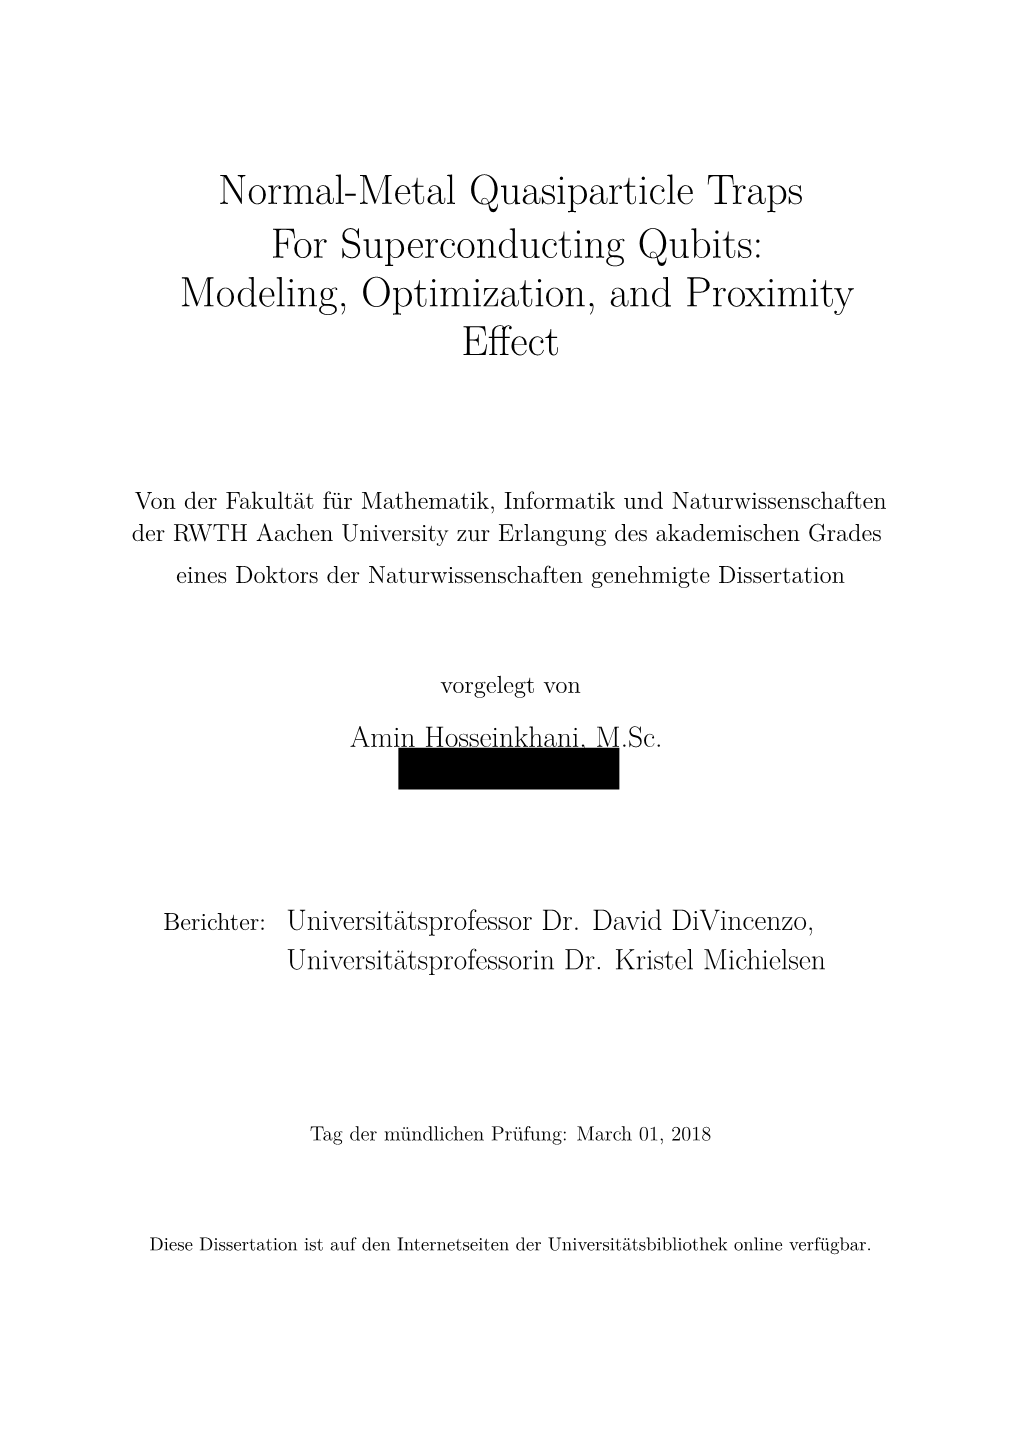 "Normal-Metal Quasiparticle Traps for Superconducting Qubits"